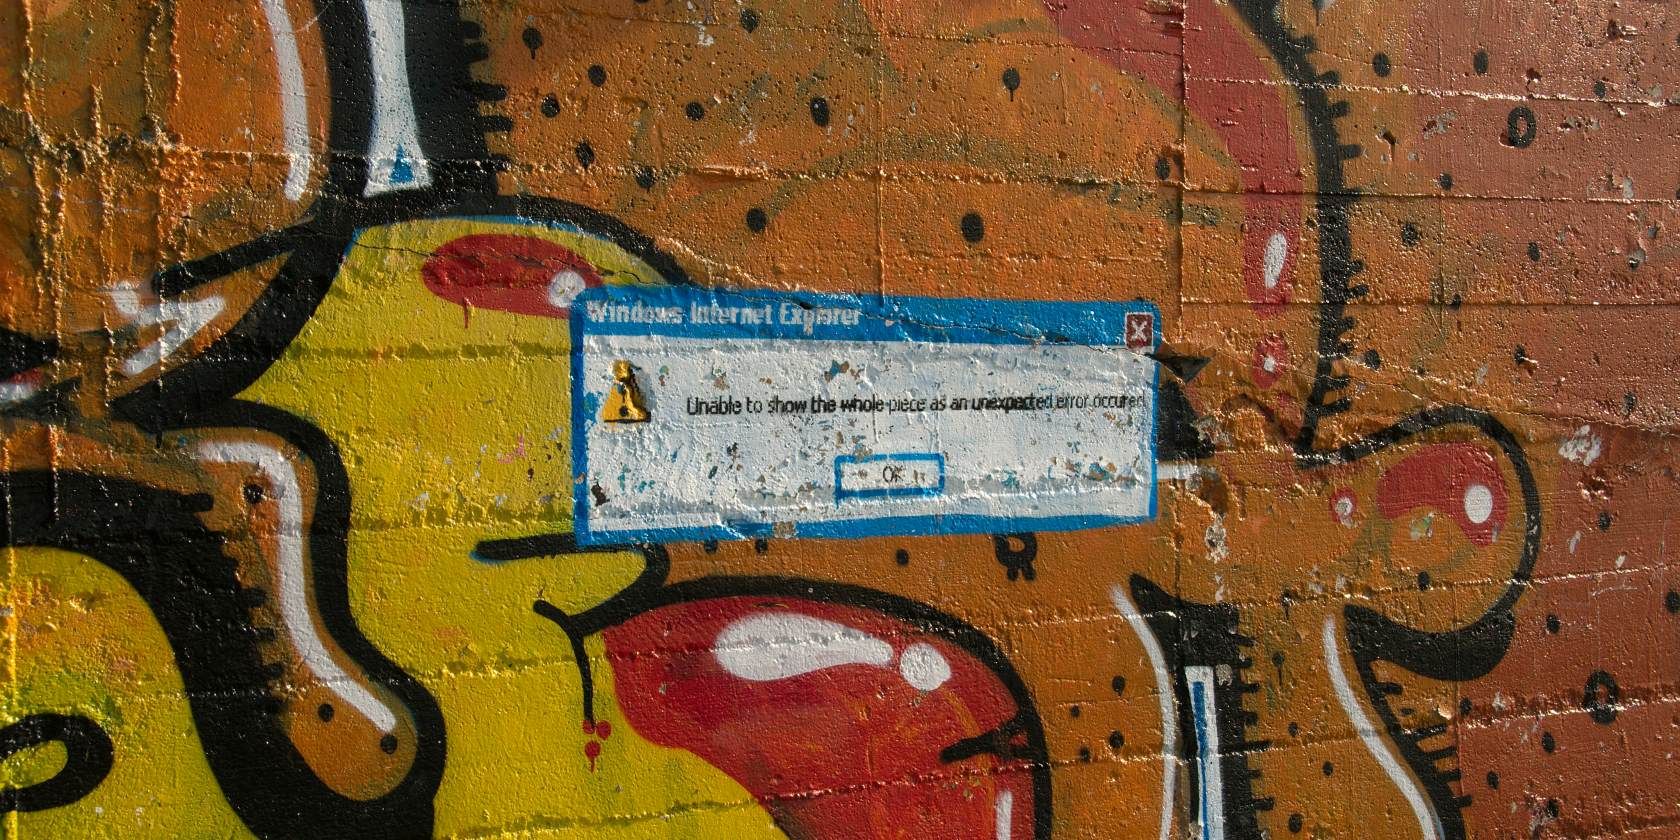 Graffiti on wall showing Windows error dialog box